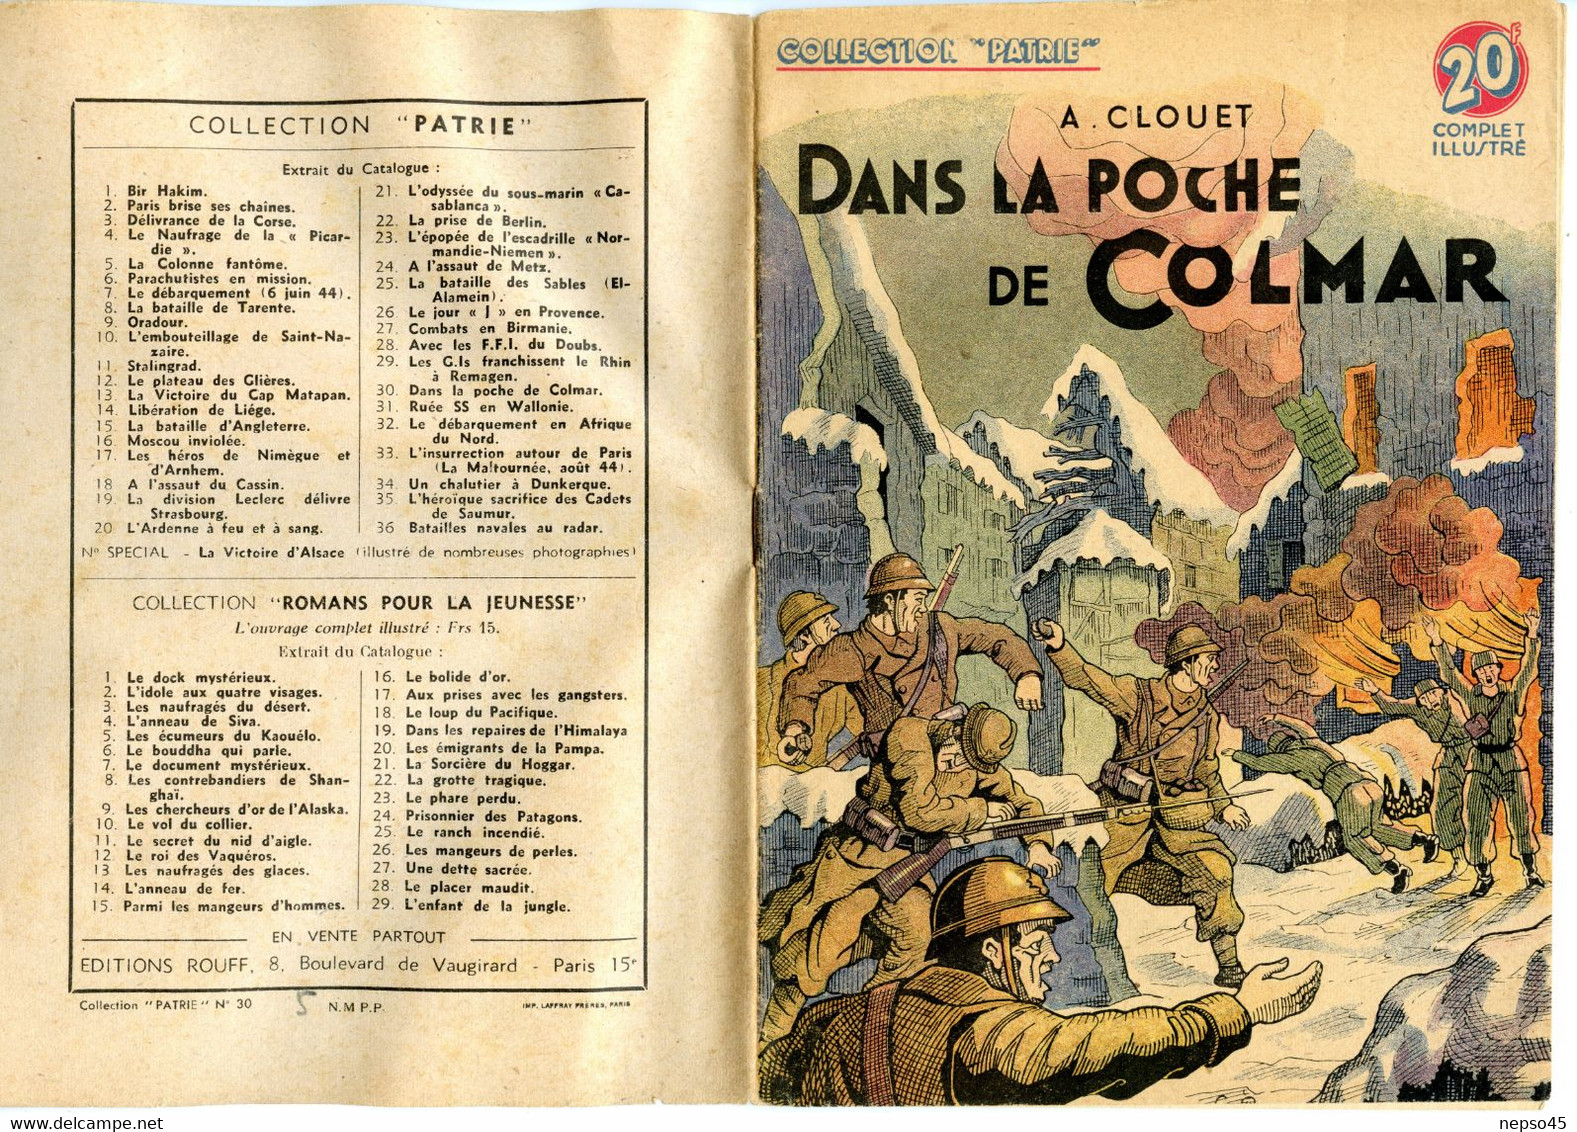 1939-45 Poche de Colmar.Ensisheim.esprit de propagande de guerre très germanophobe.glorification d'exploits.